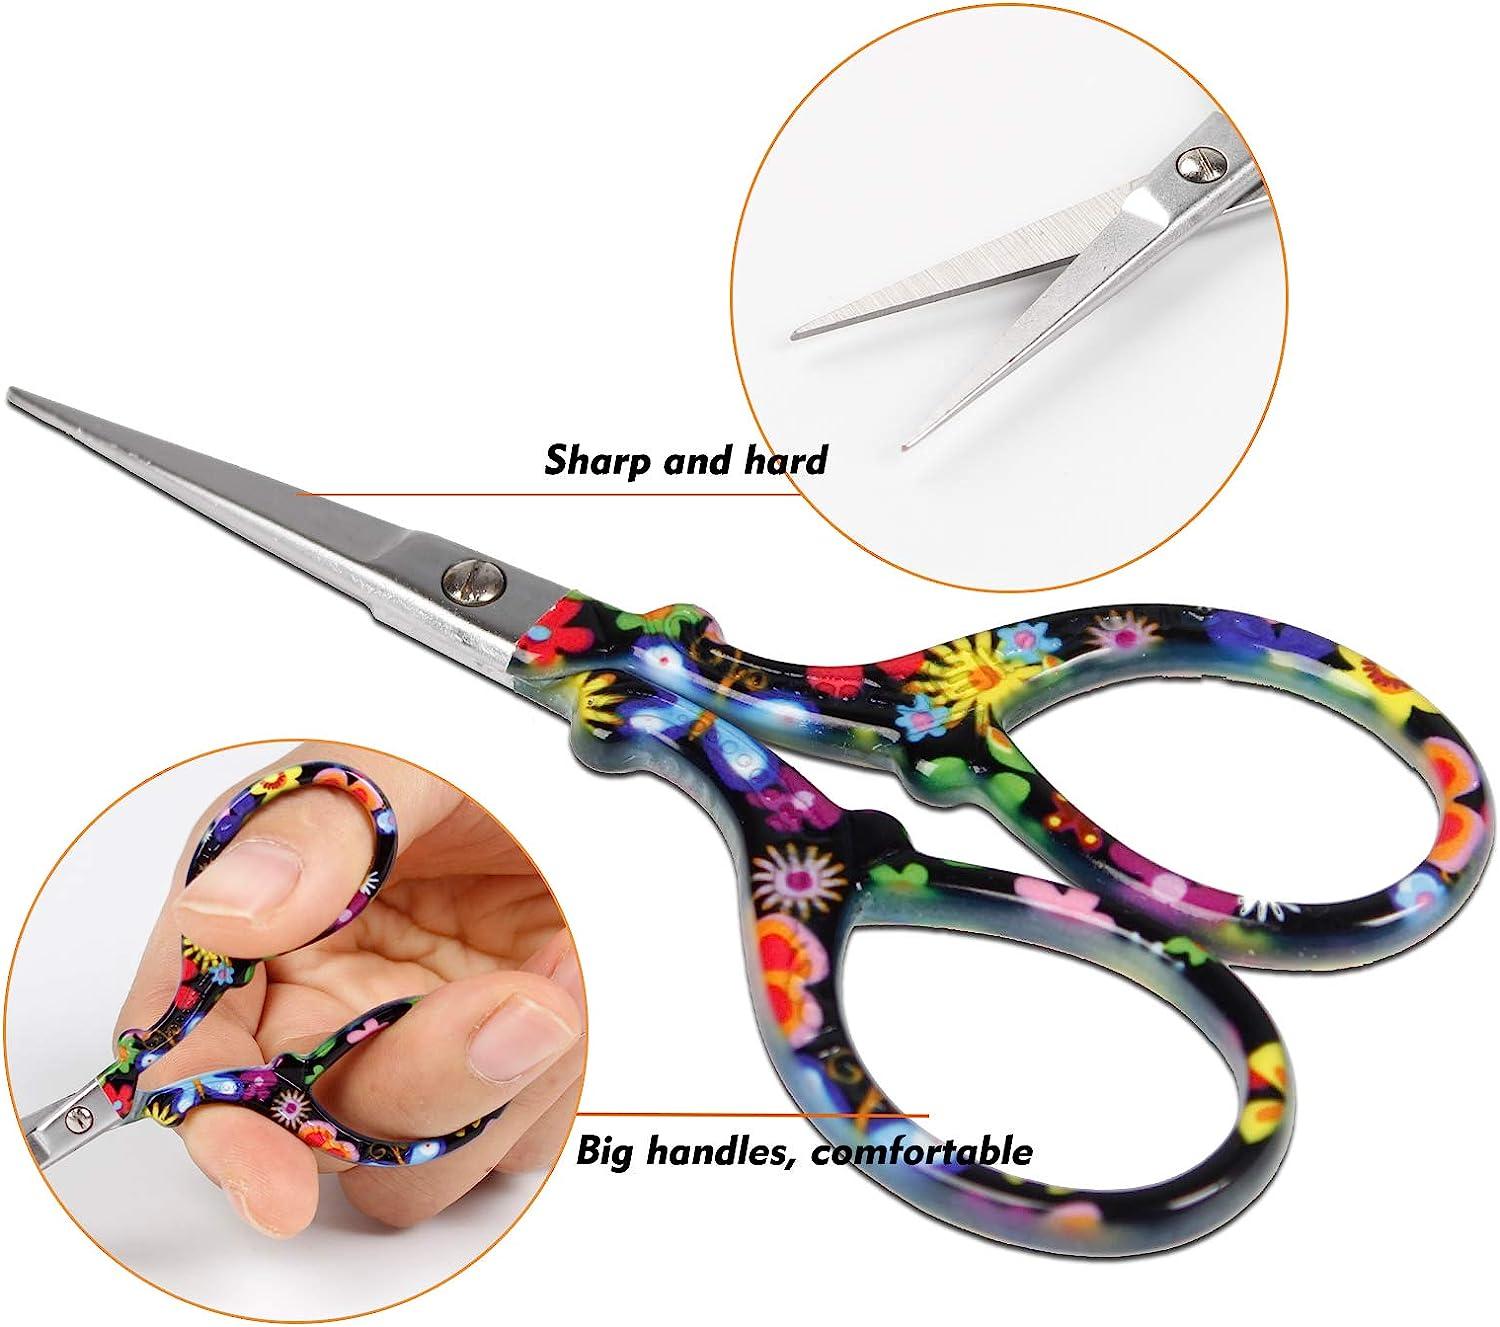 Hisuper Sewing scissors sharp scissors Embroidery Scissors